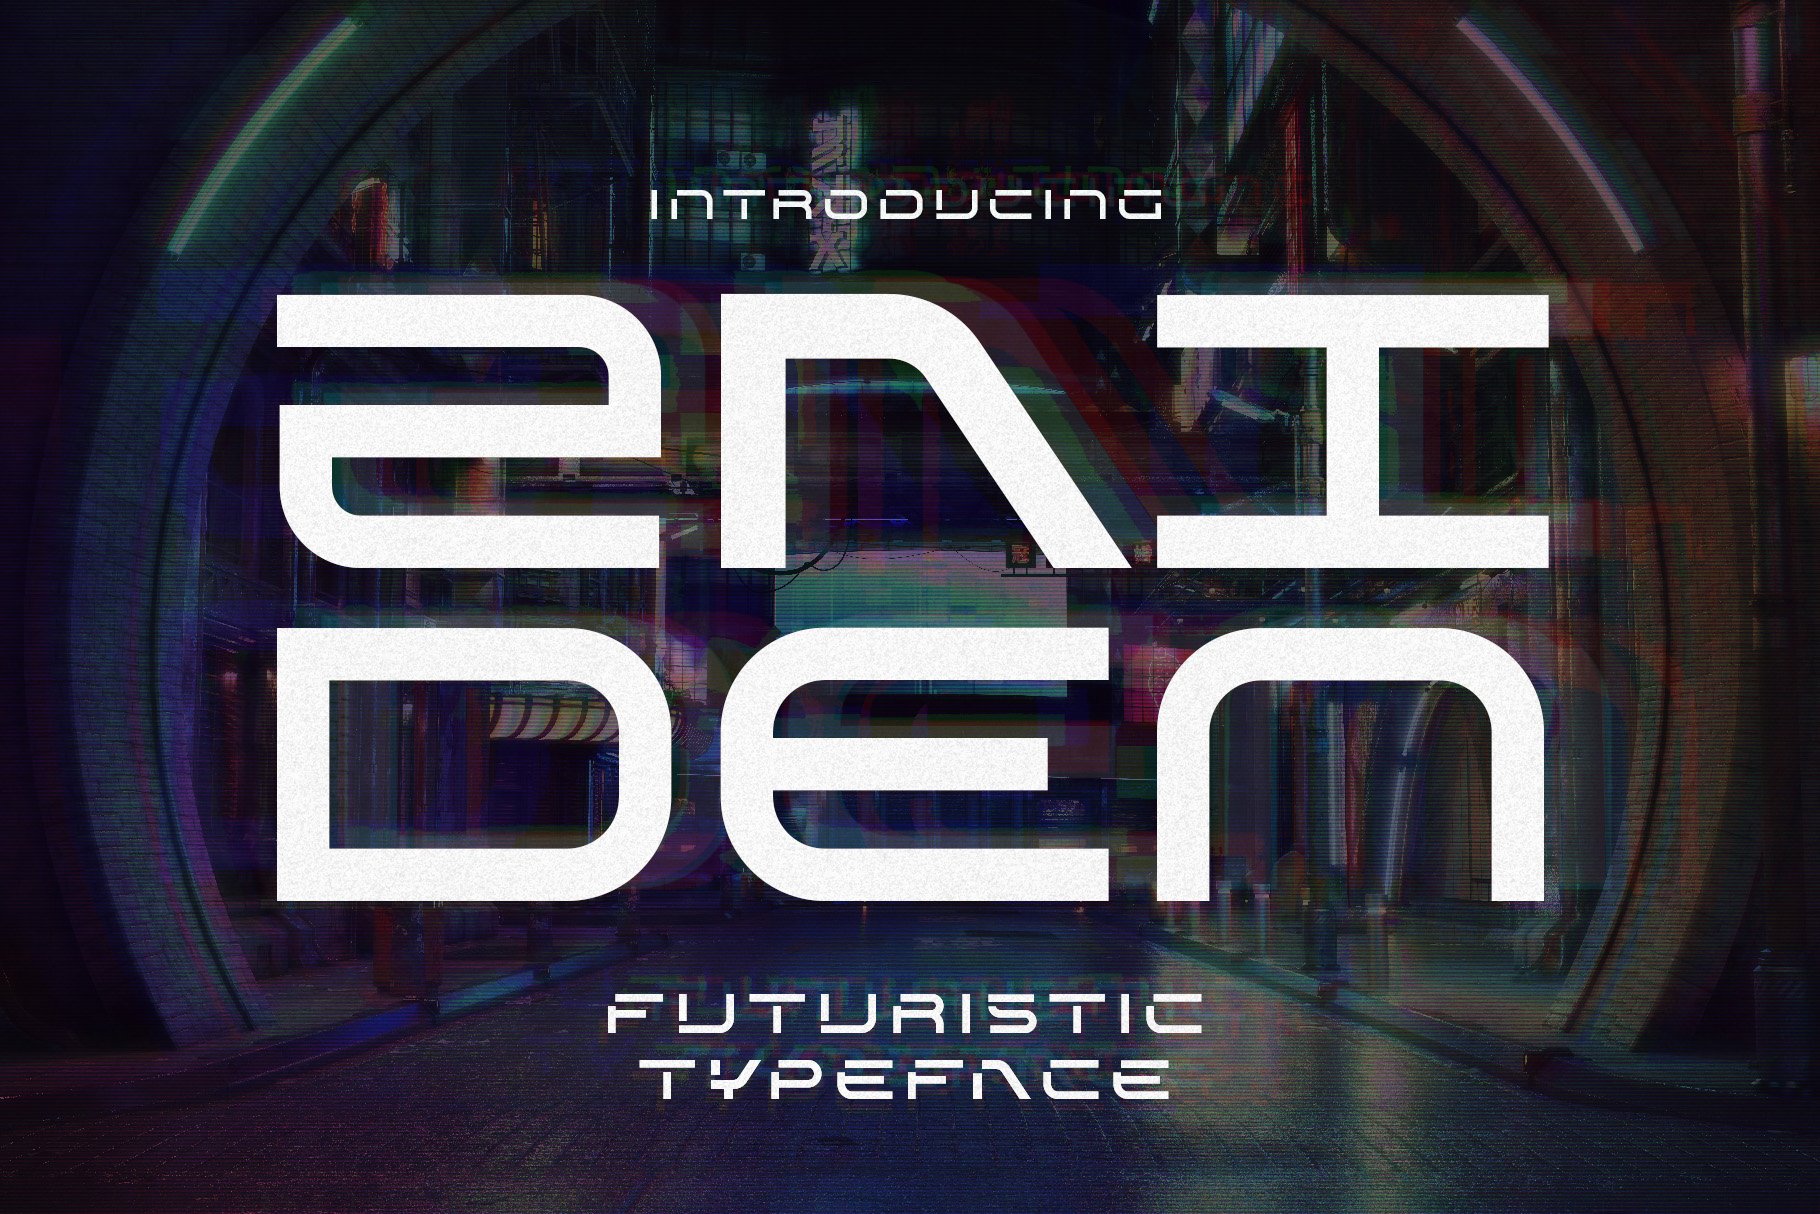 Zaiden - Futuristic Typeface cover image.